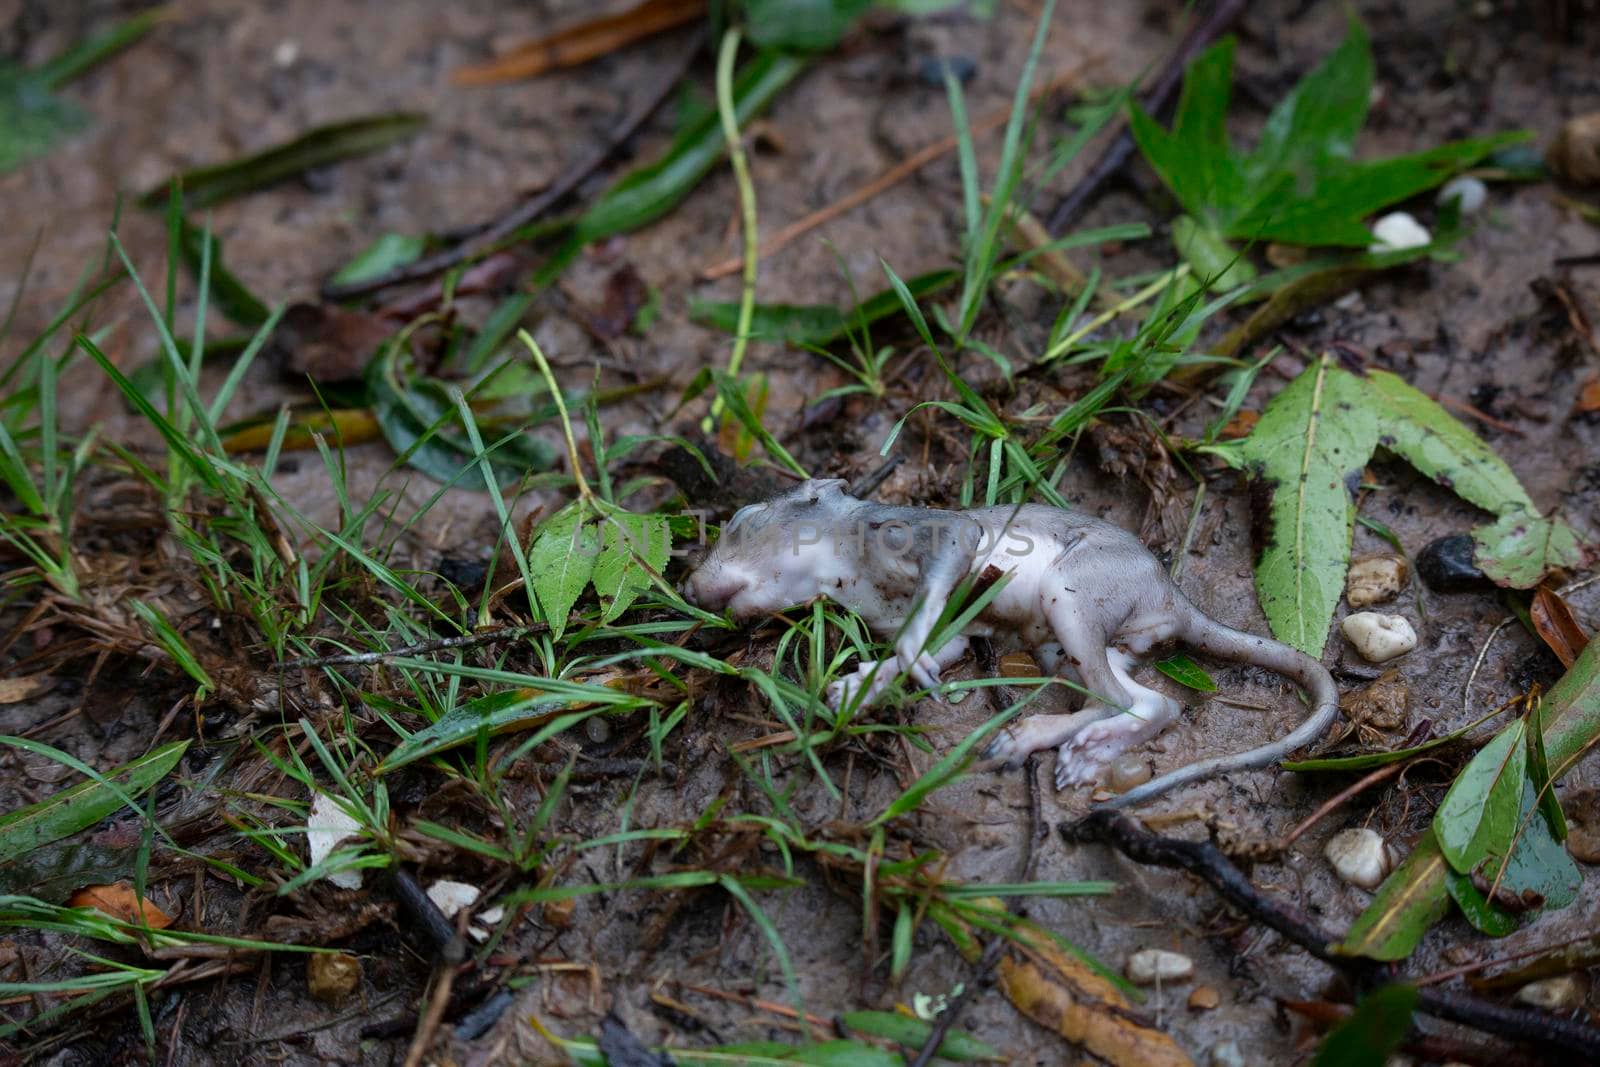 Dead baby eastern gray squirrel (Sciurus carolinensis) on mud